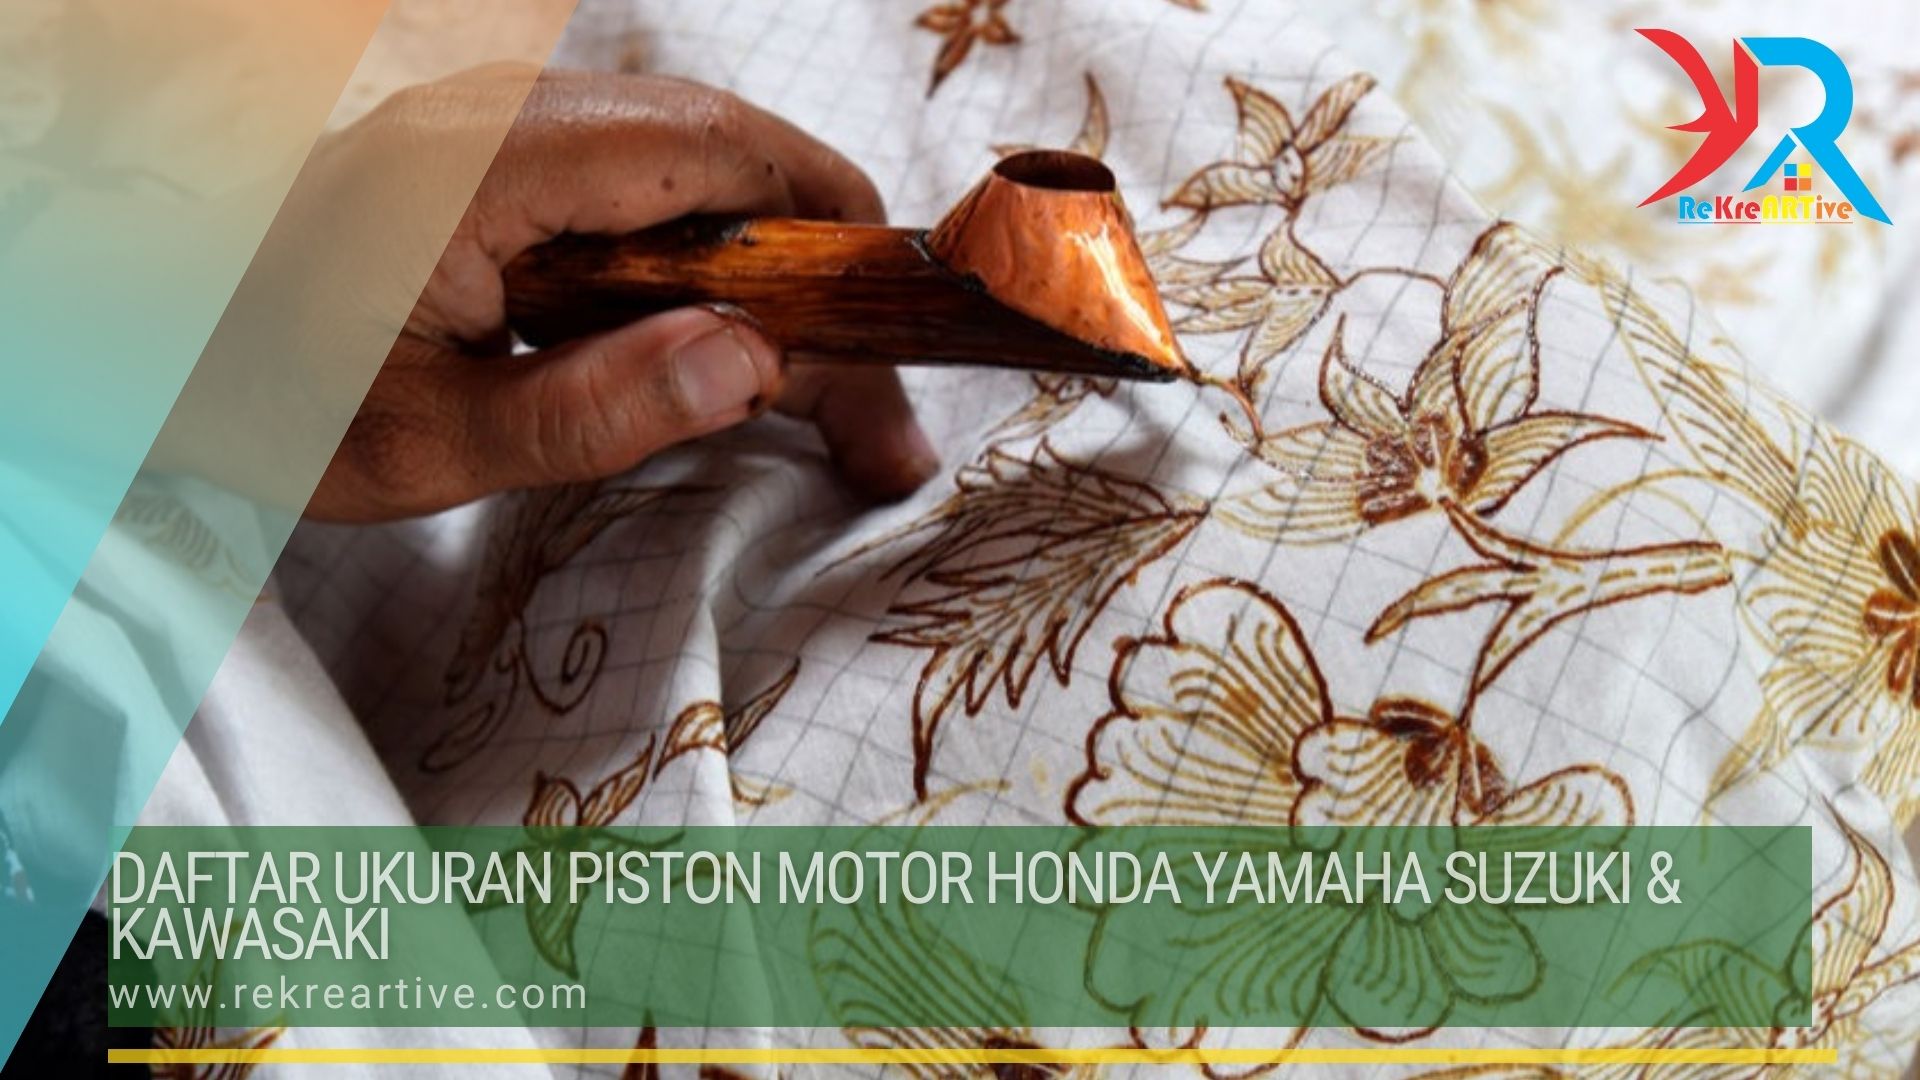 Ukuran Piston Motor Suzuki Nex. Daftar Ukuran Piston Motor Honda Yamaha Suzuki & Kawasaki